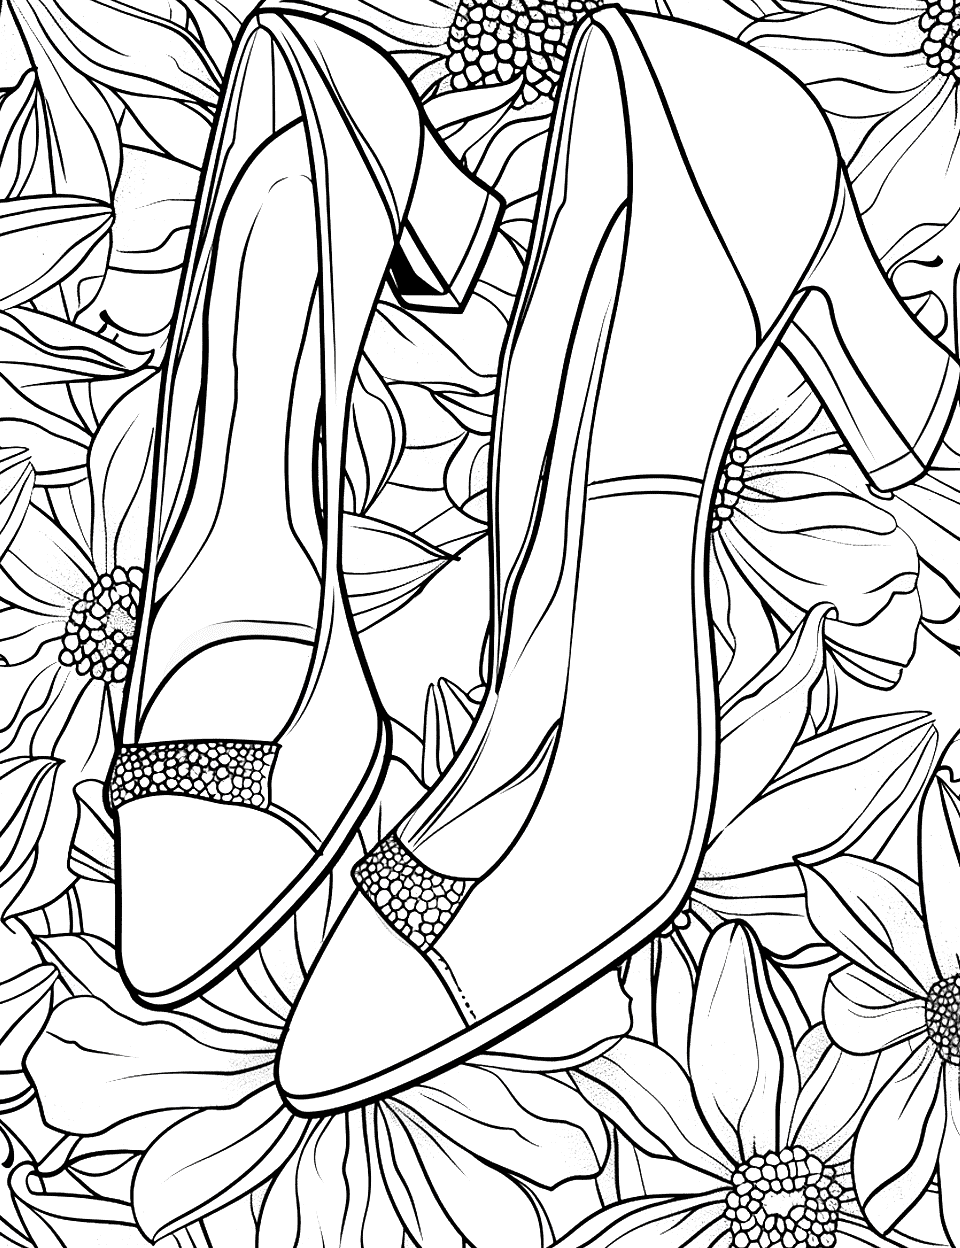 High Heels Flower Shoe Coloring Page - Elegant high-heeled shoes laid out in an elegant flower background.